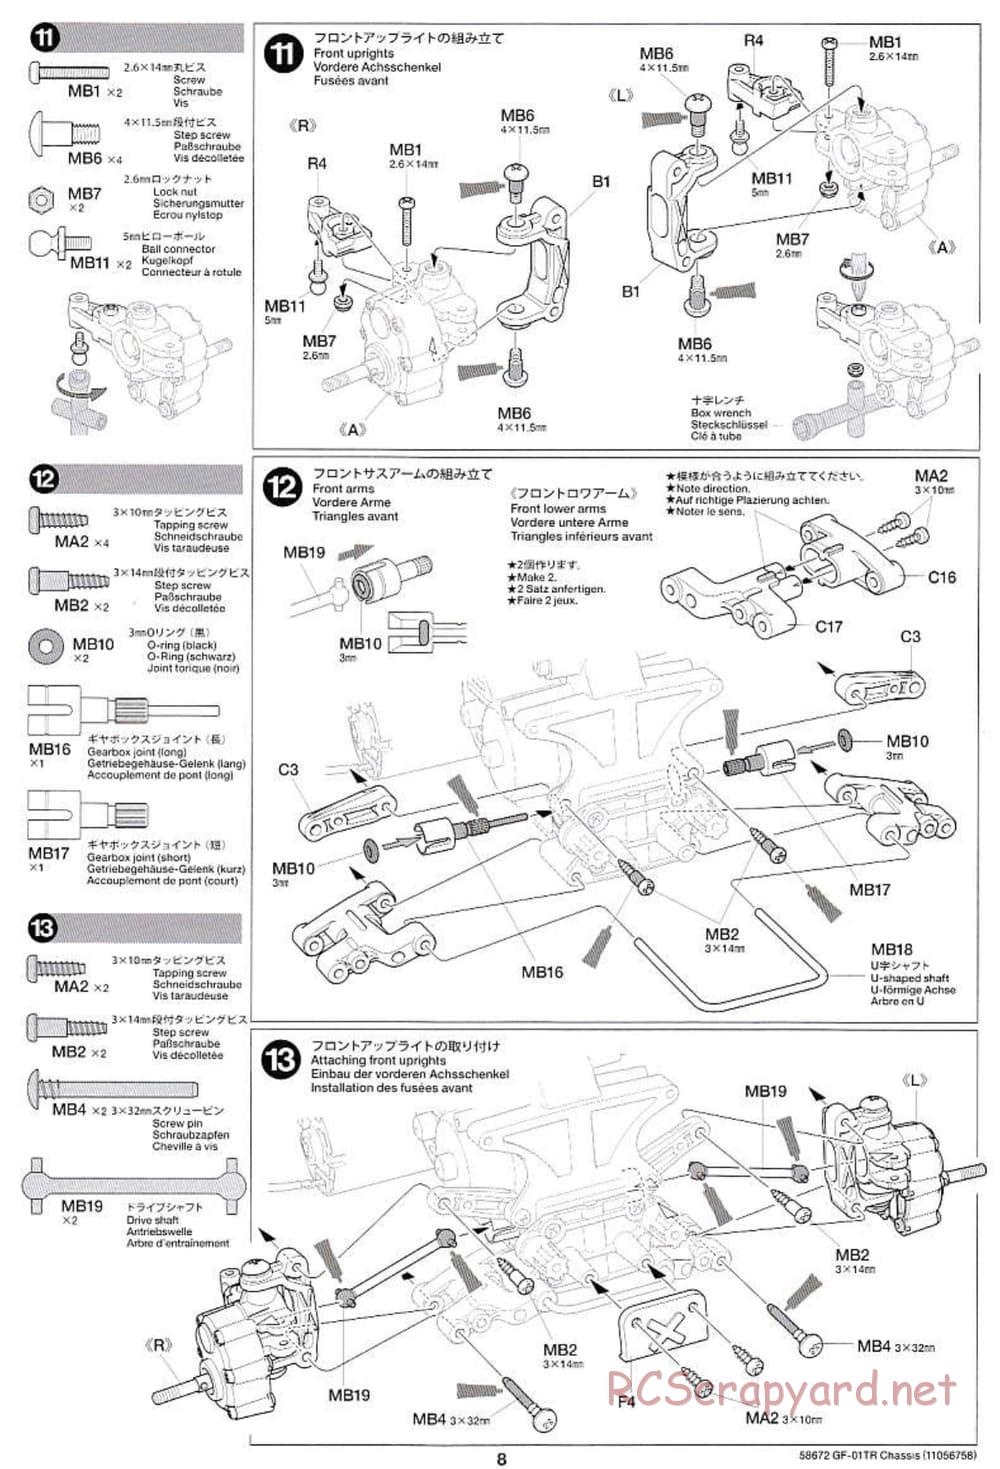 Tamiya - Monster Beetle Trail - GF-01TR Chassis - Manual - Page 8